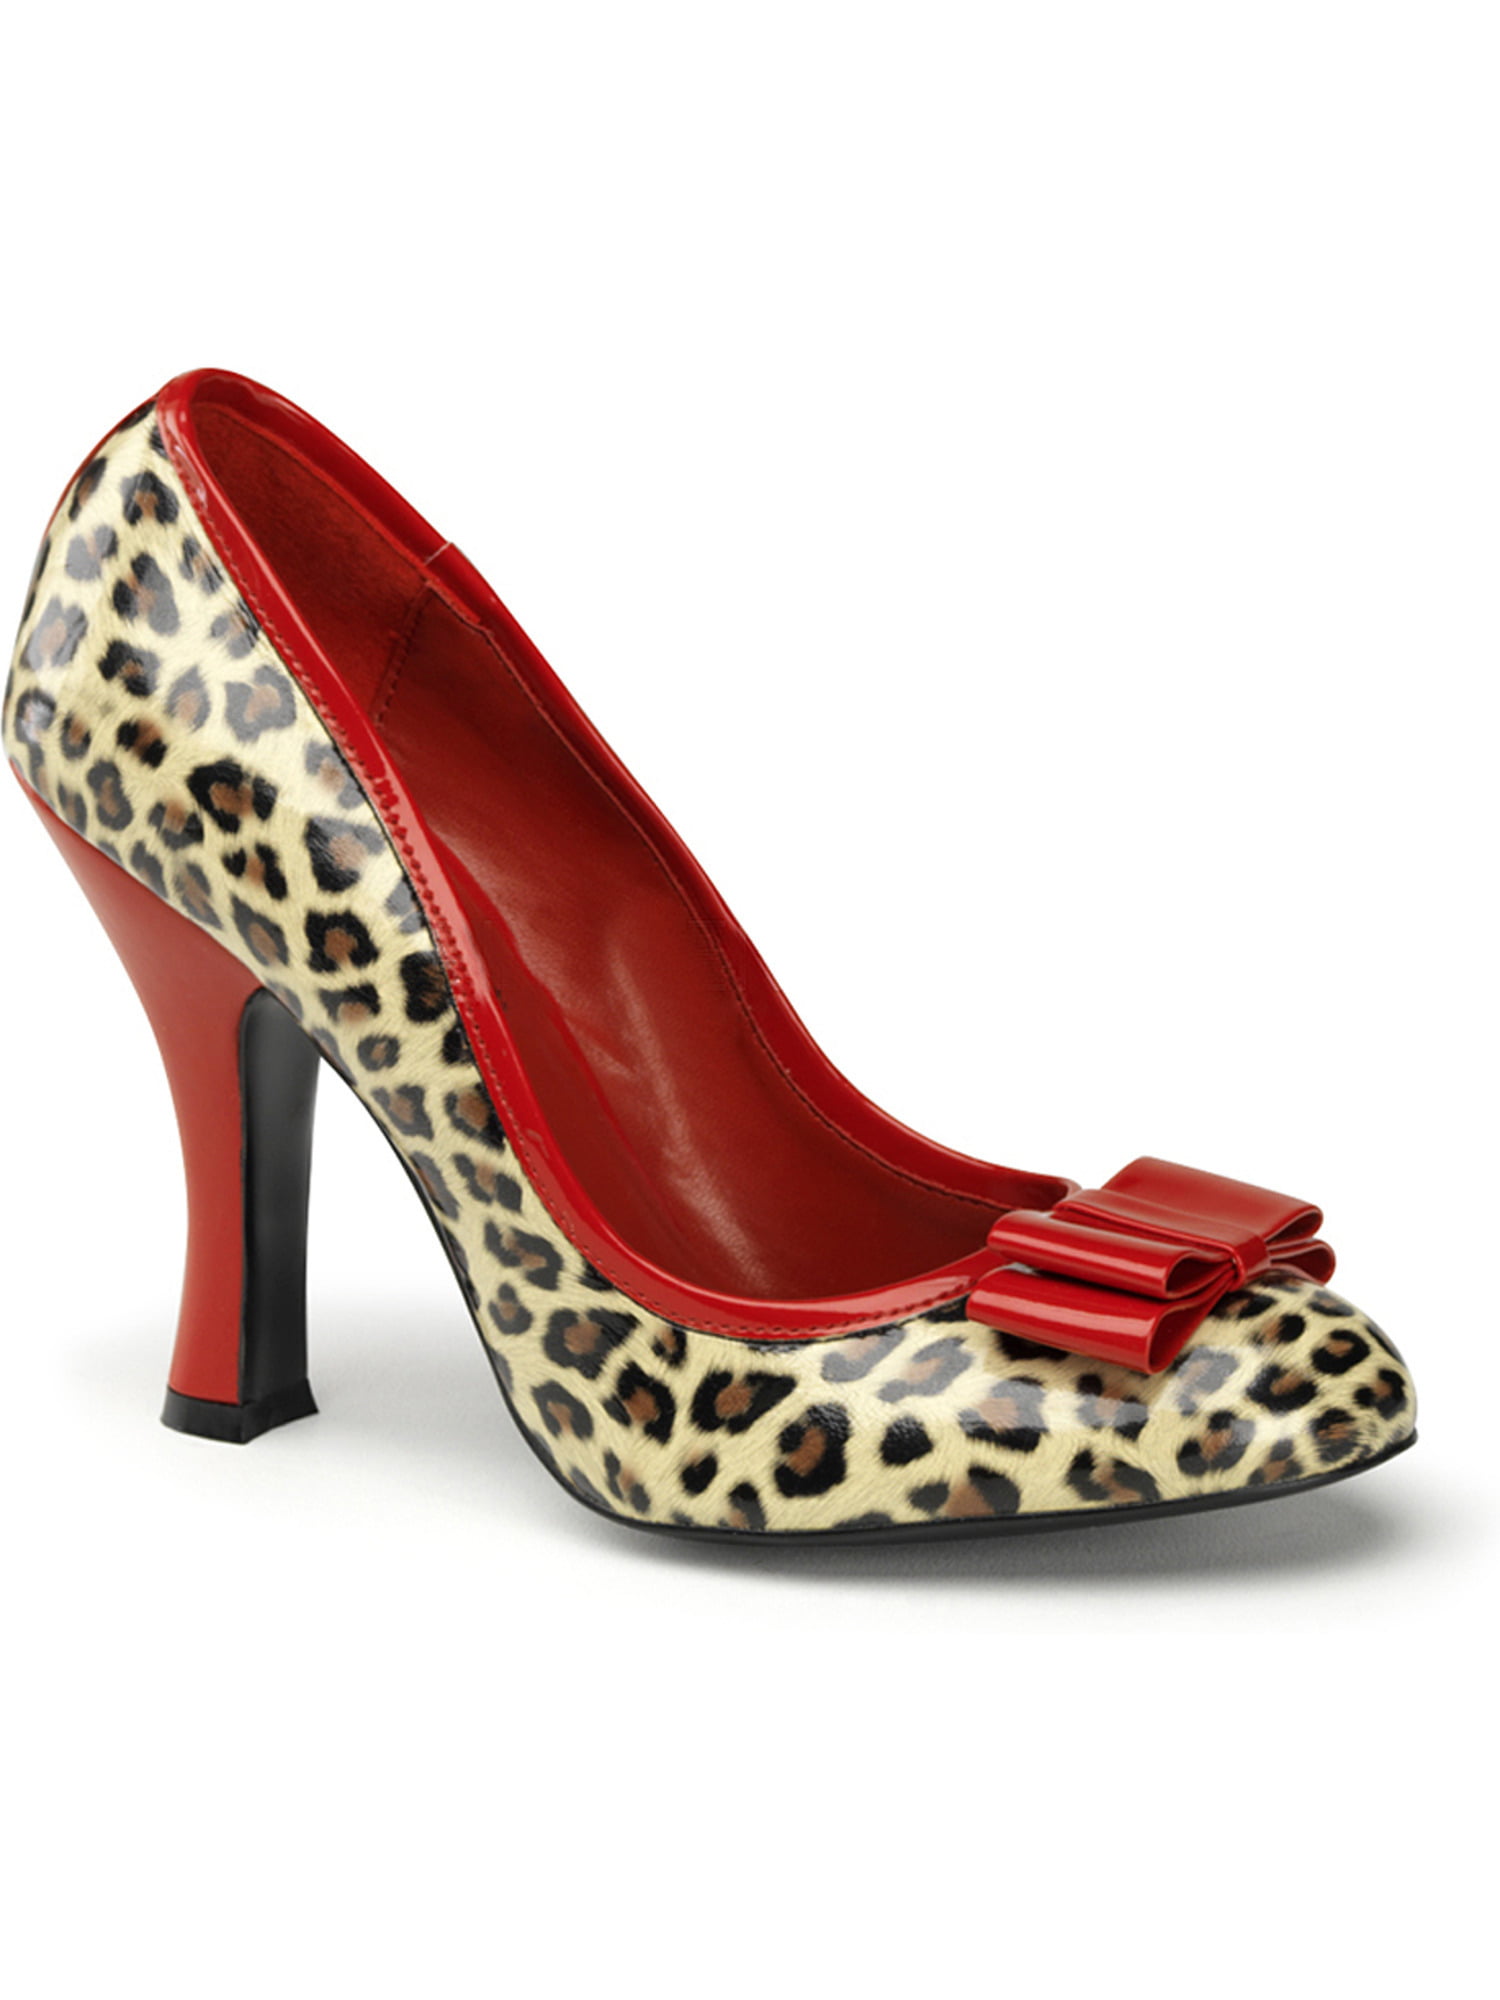 Womens Leopard Print Pumps 4 Inch Heels 